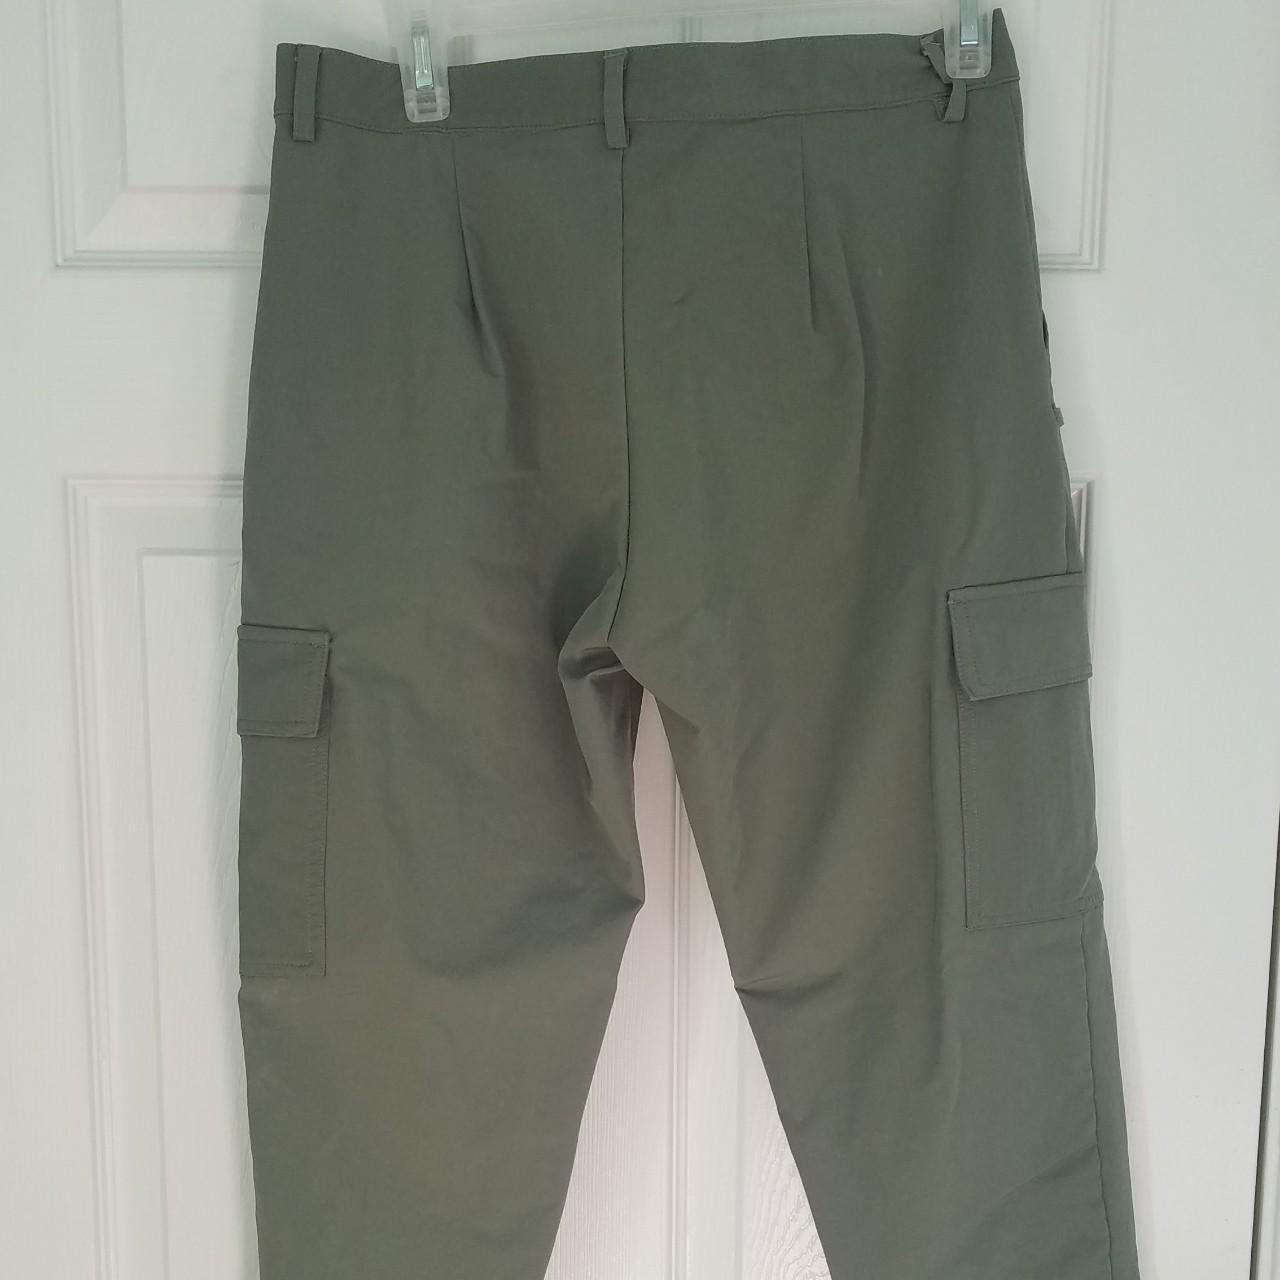 Product Image 4 - Mauvais green pants size 30